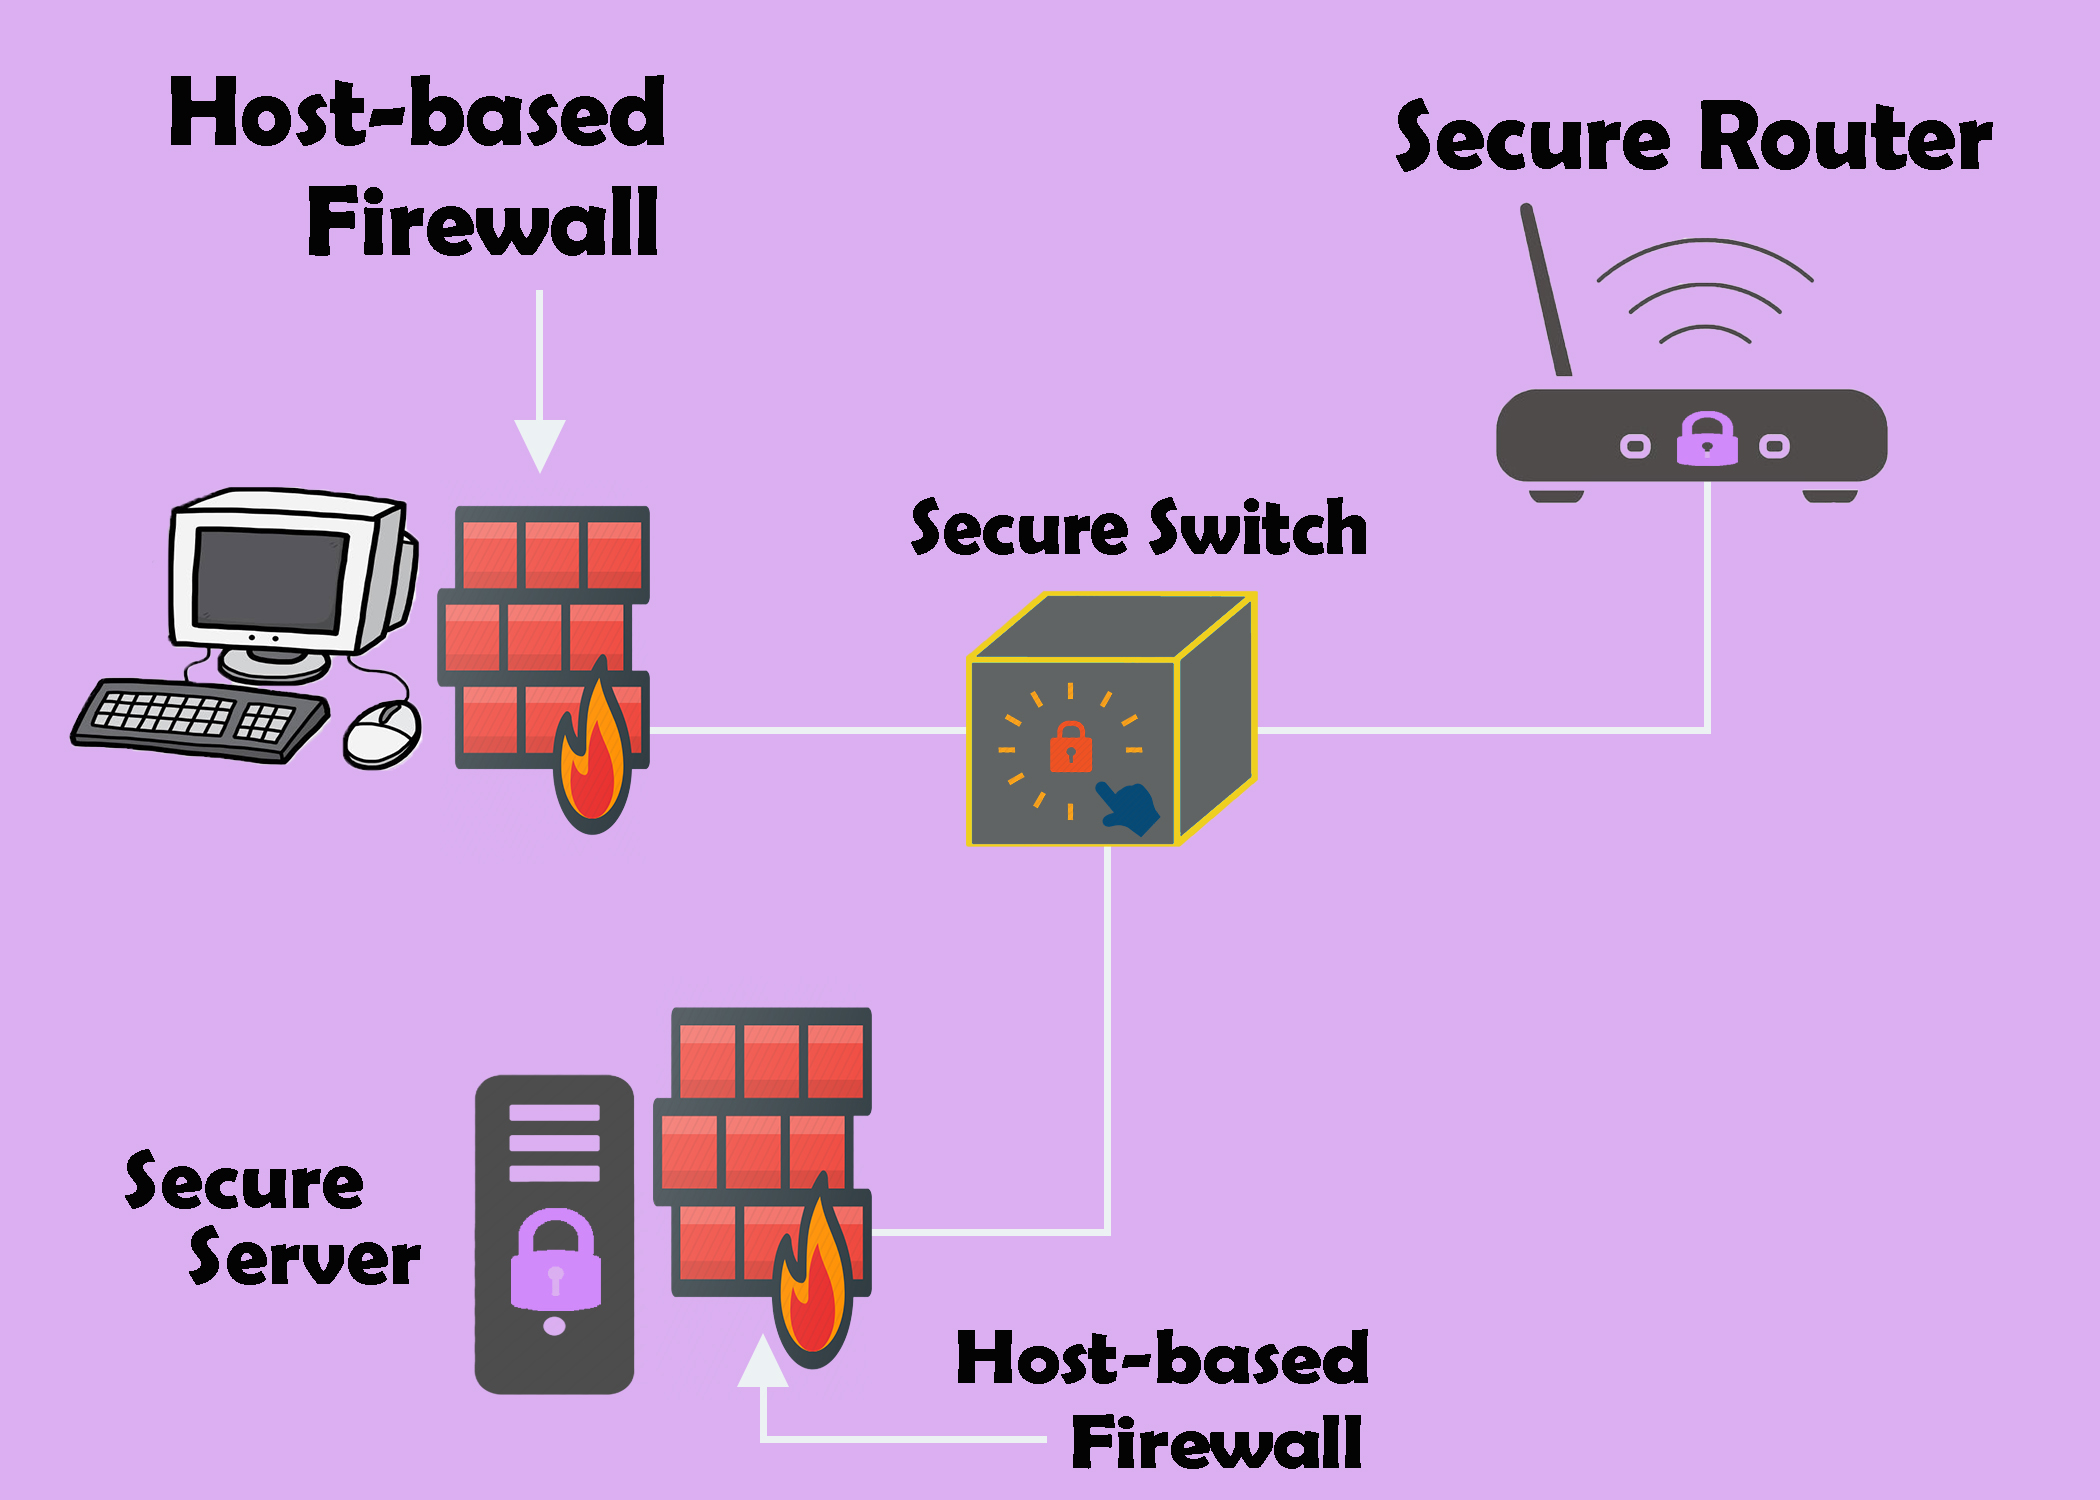 Host-based firewall